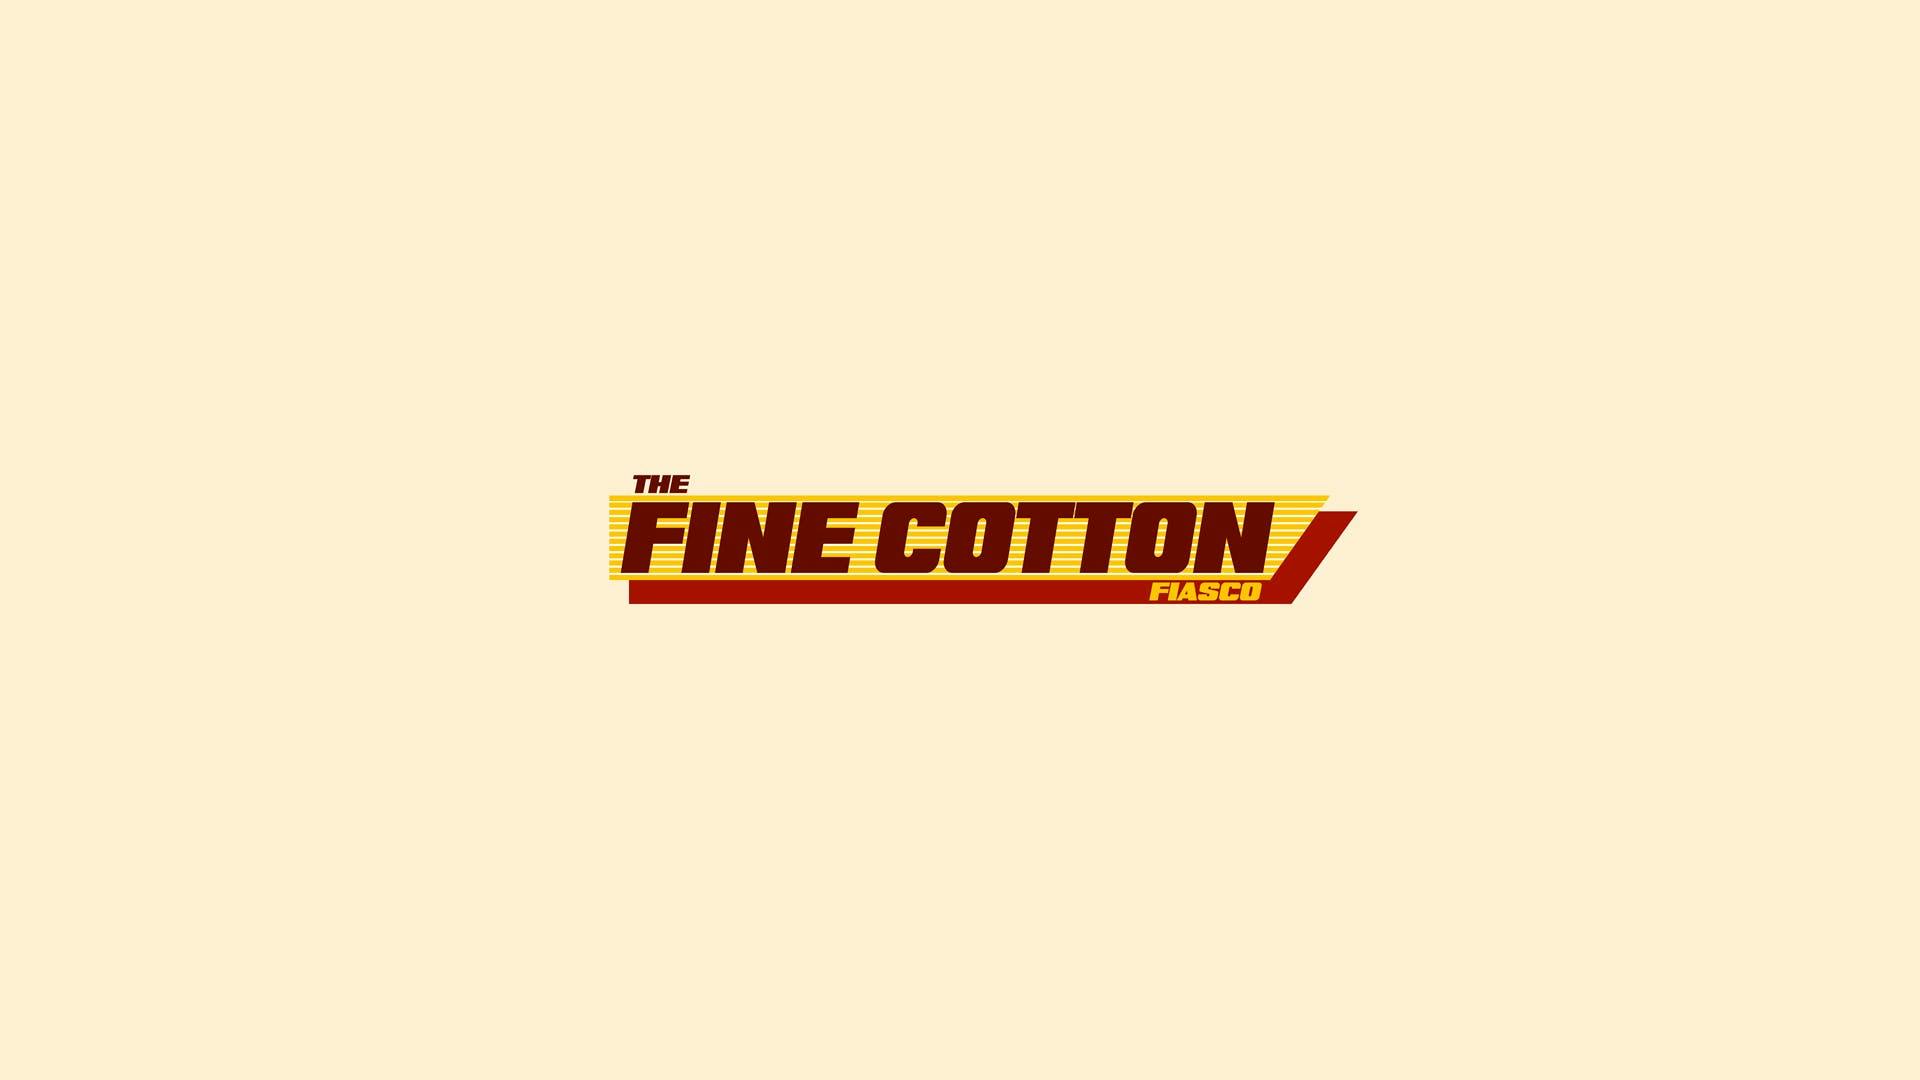 THE FINE COTTON FIASCO